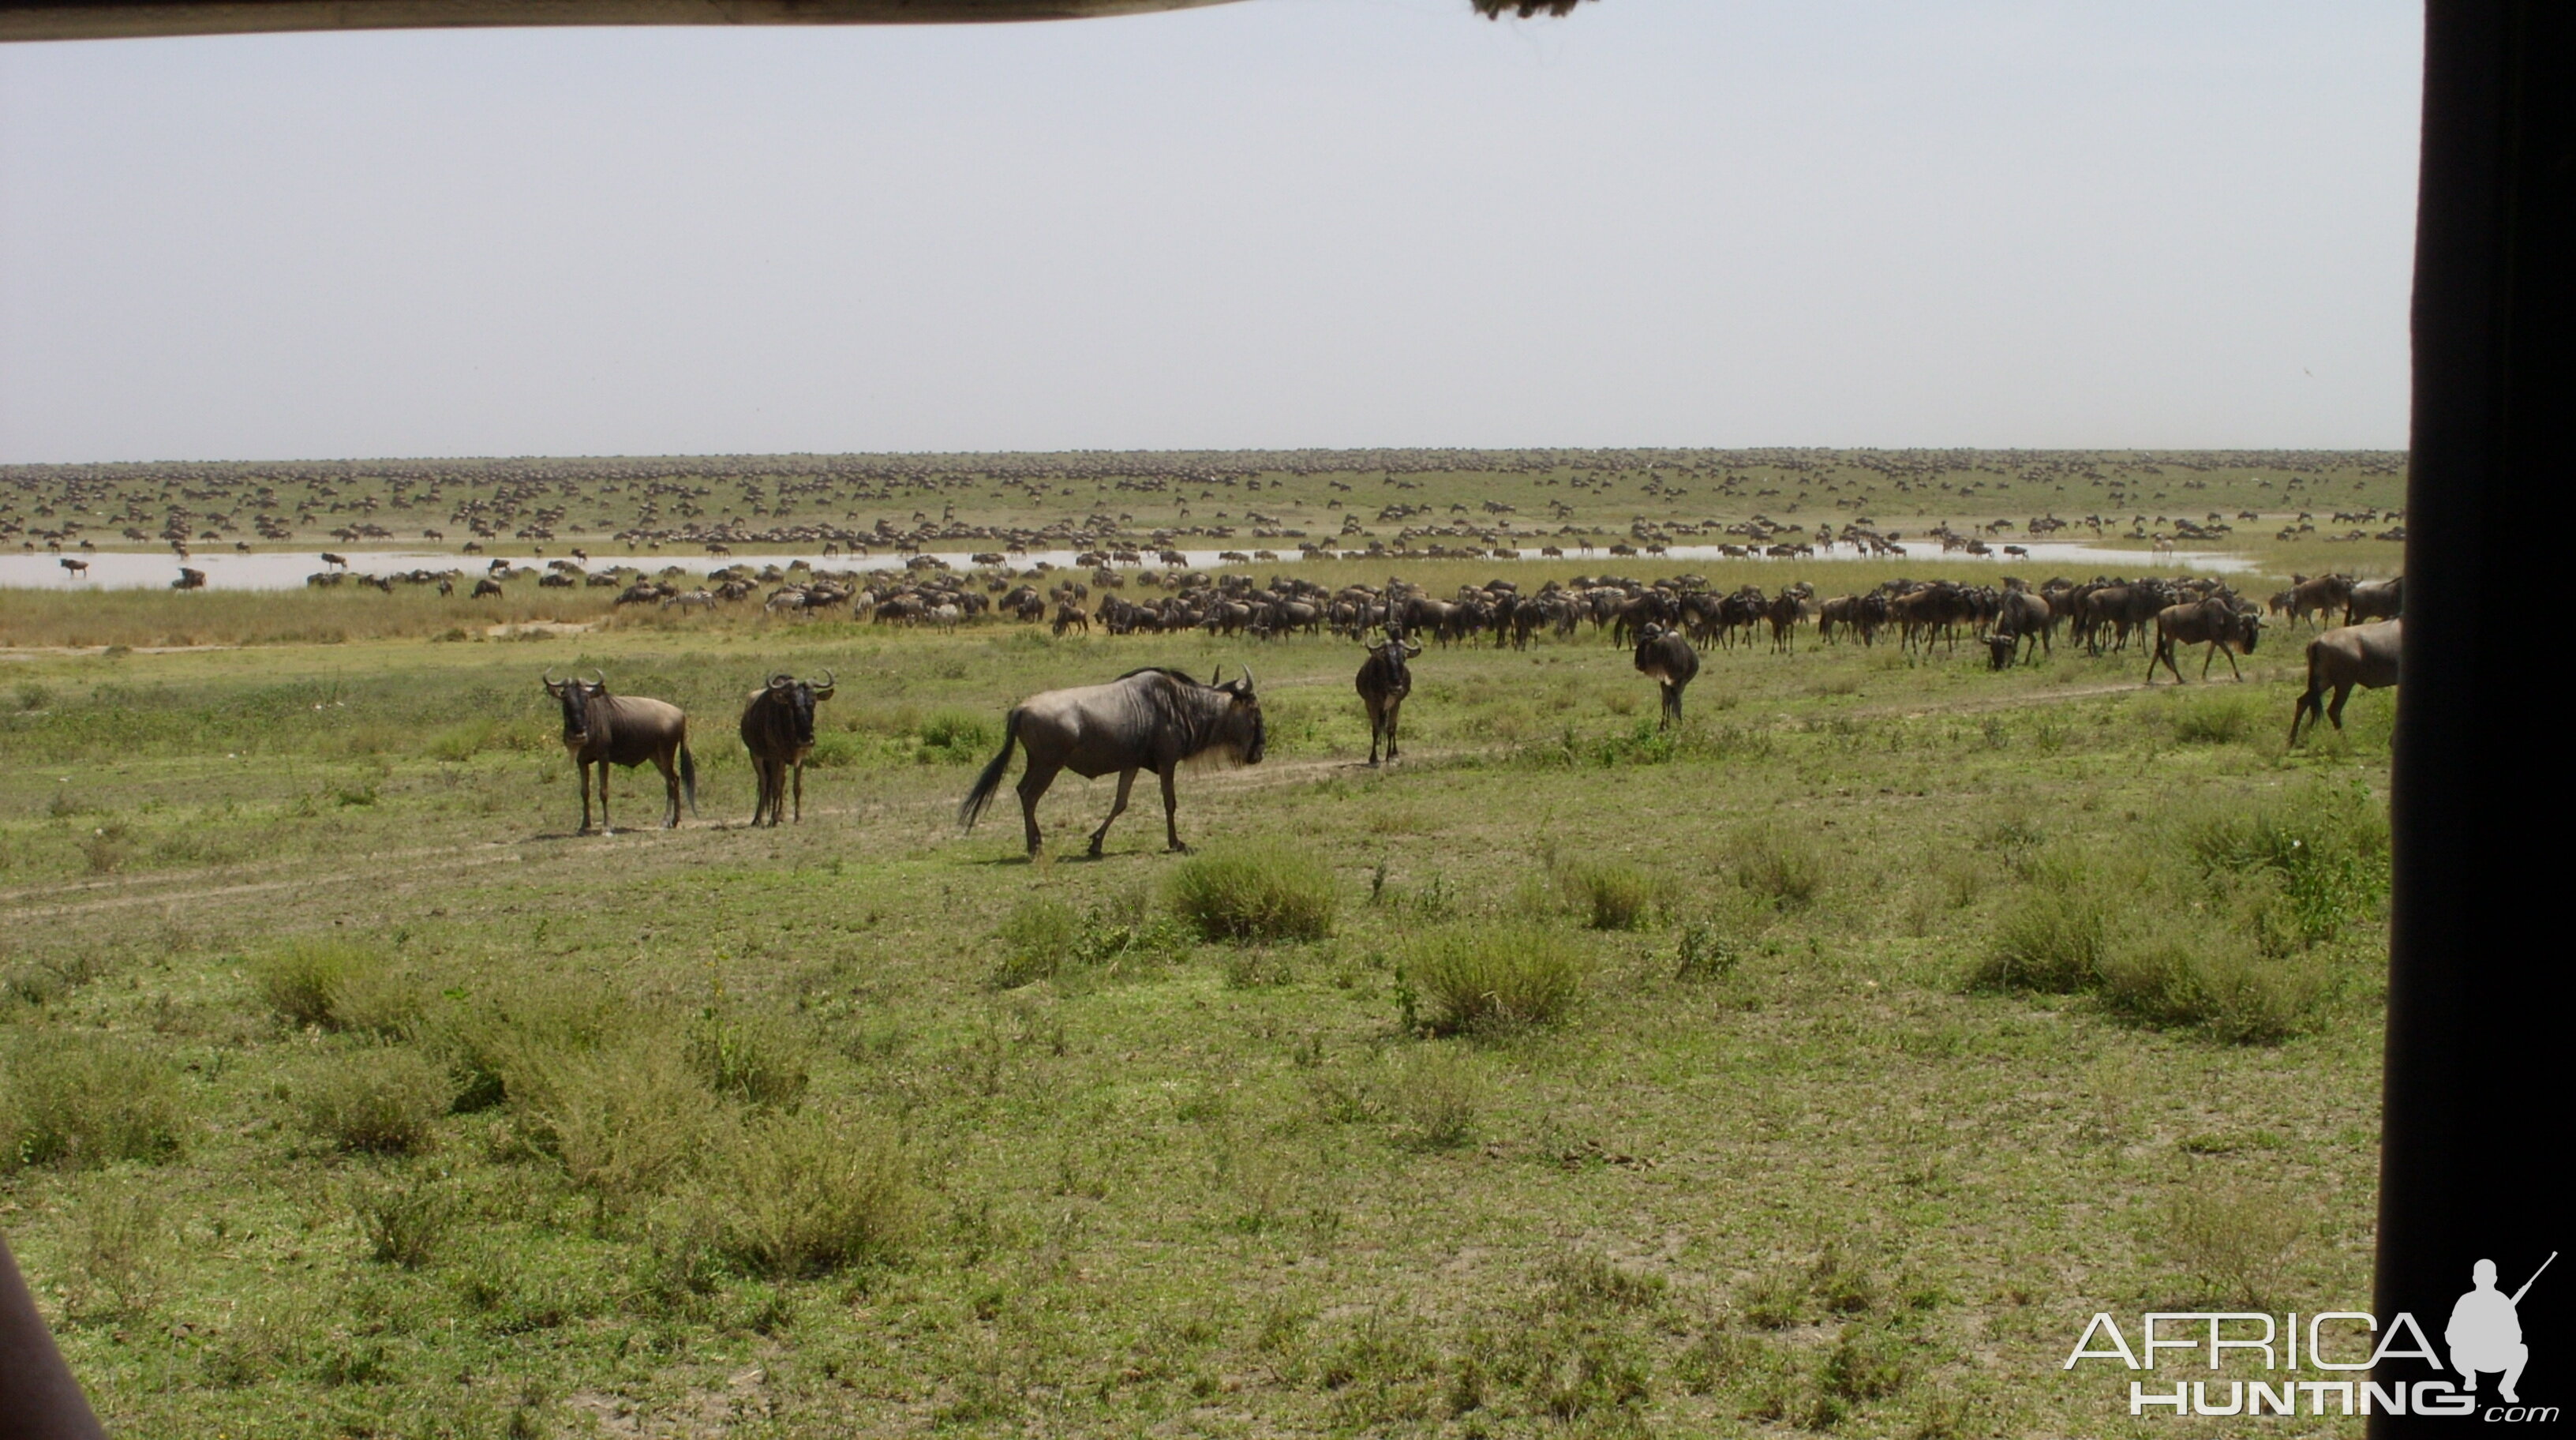 Wildebeest as far as the eye can see - Tanzania